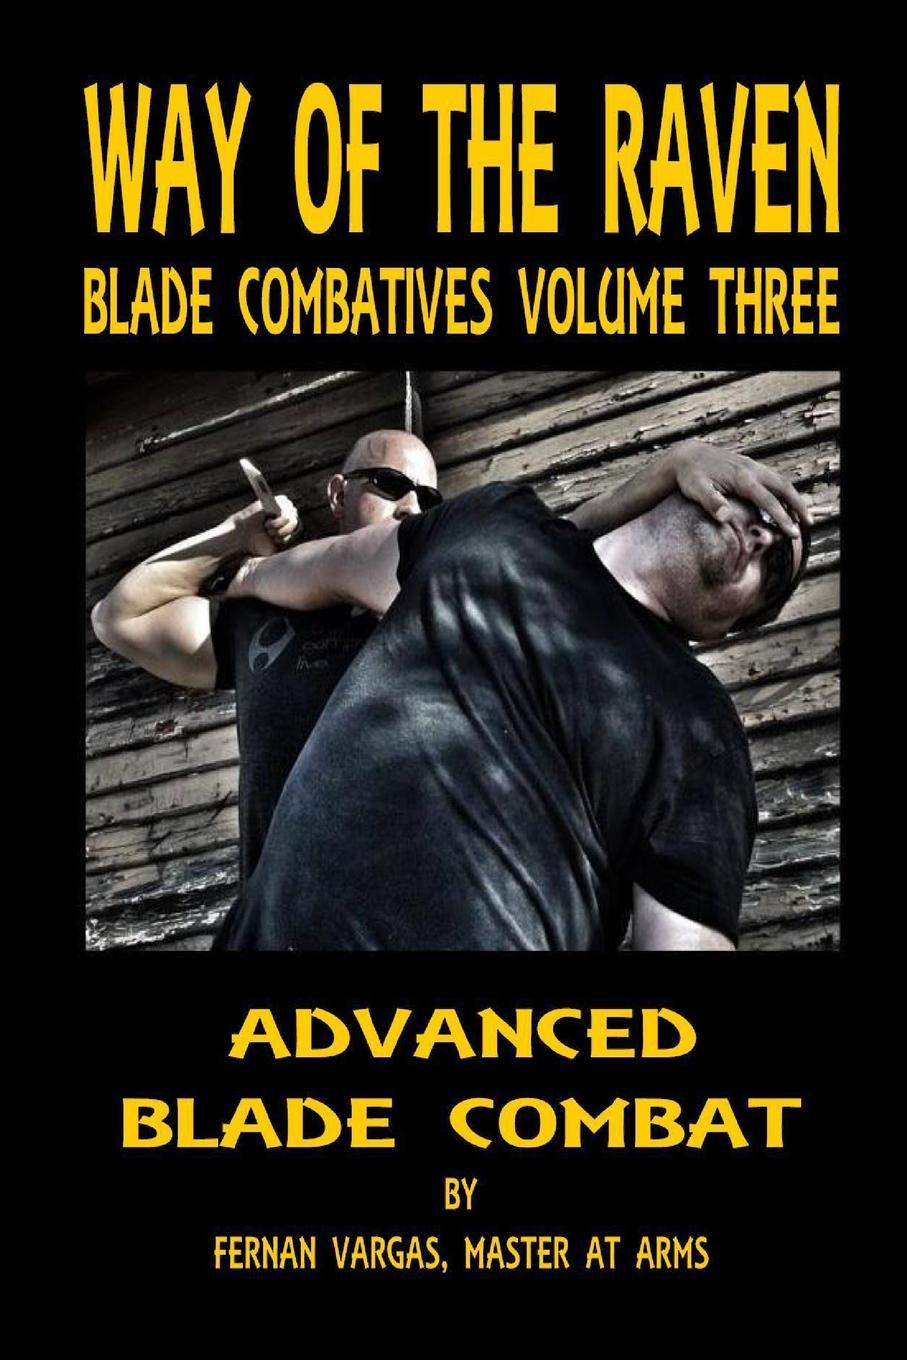 Way of the Raven Blade Combatives Volume 3. Advanced Blade Combat